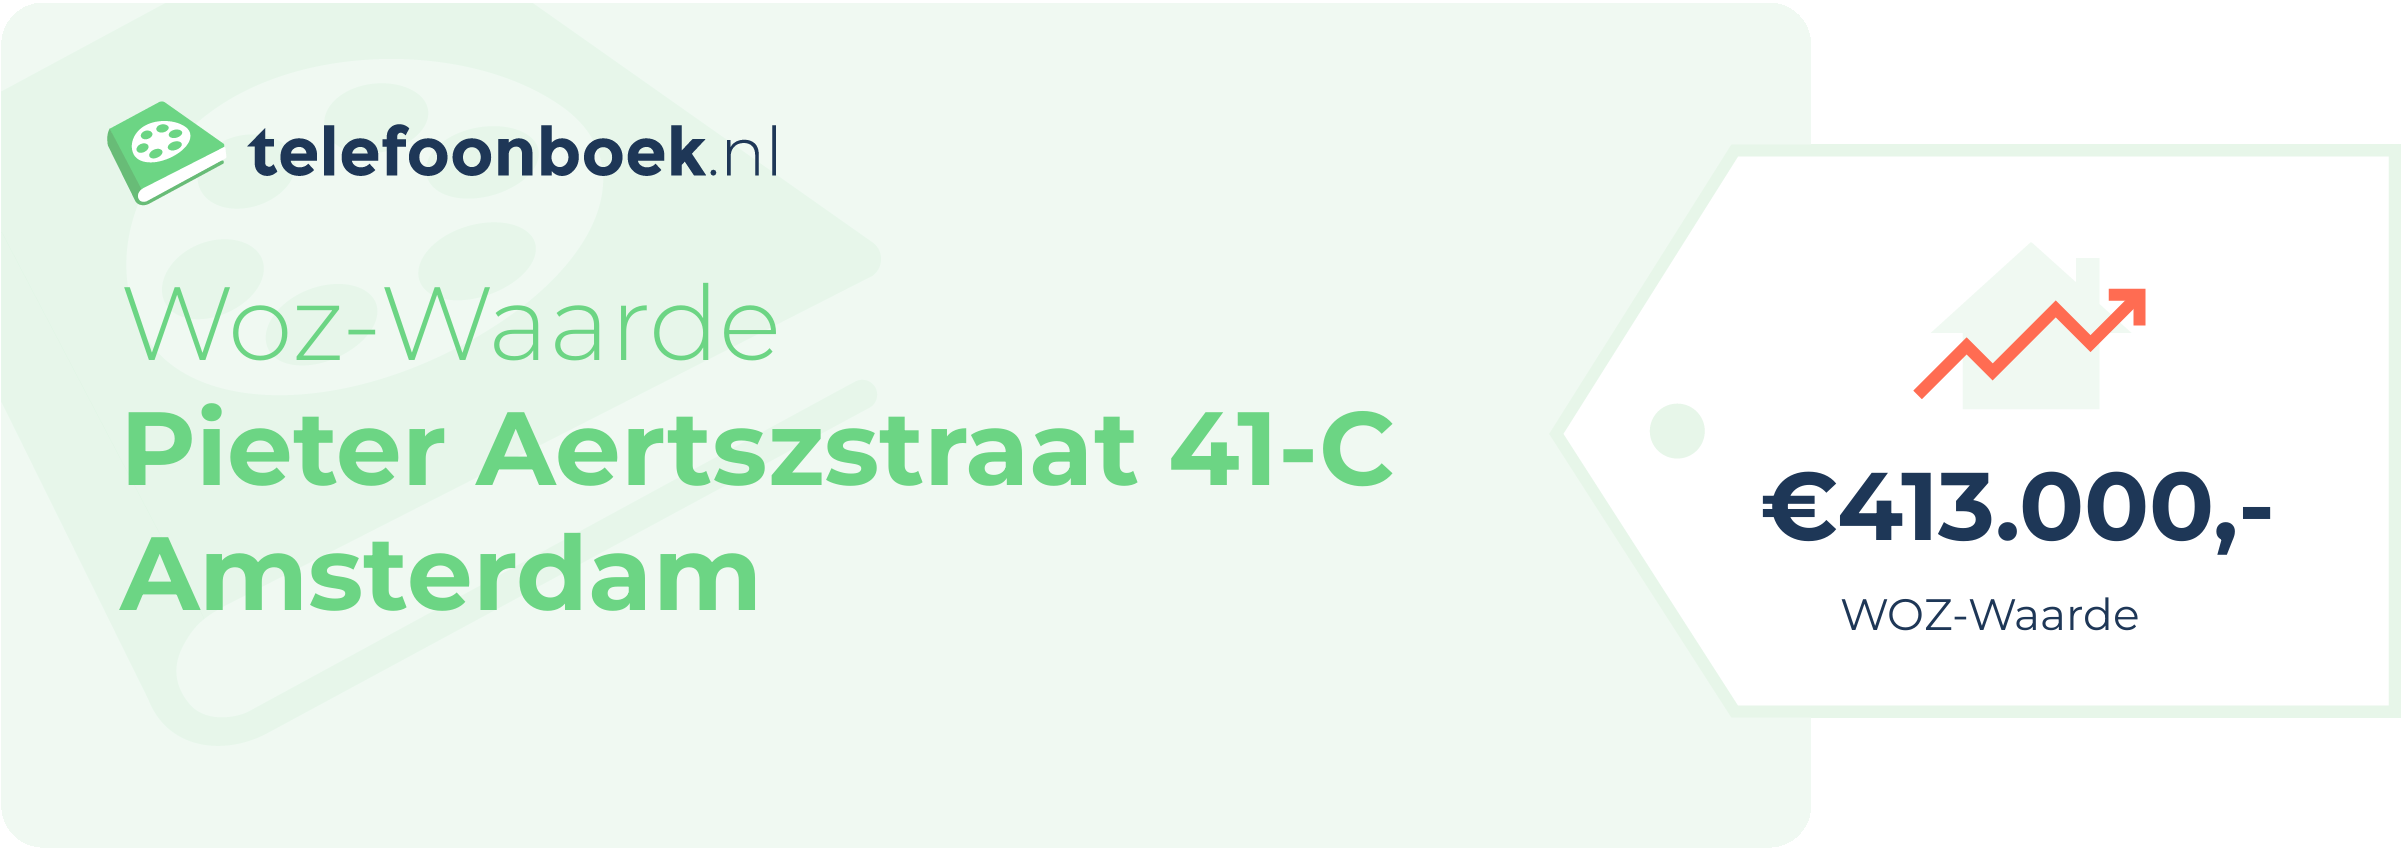 WOZ-waarde Pieter Aertszstraat 41-C Amsterdam